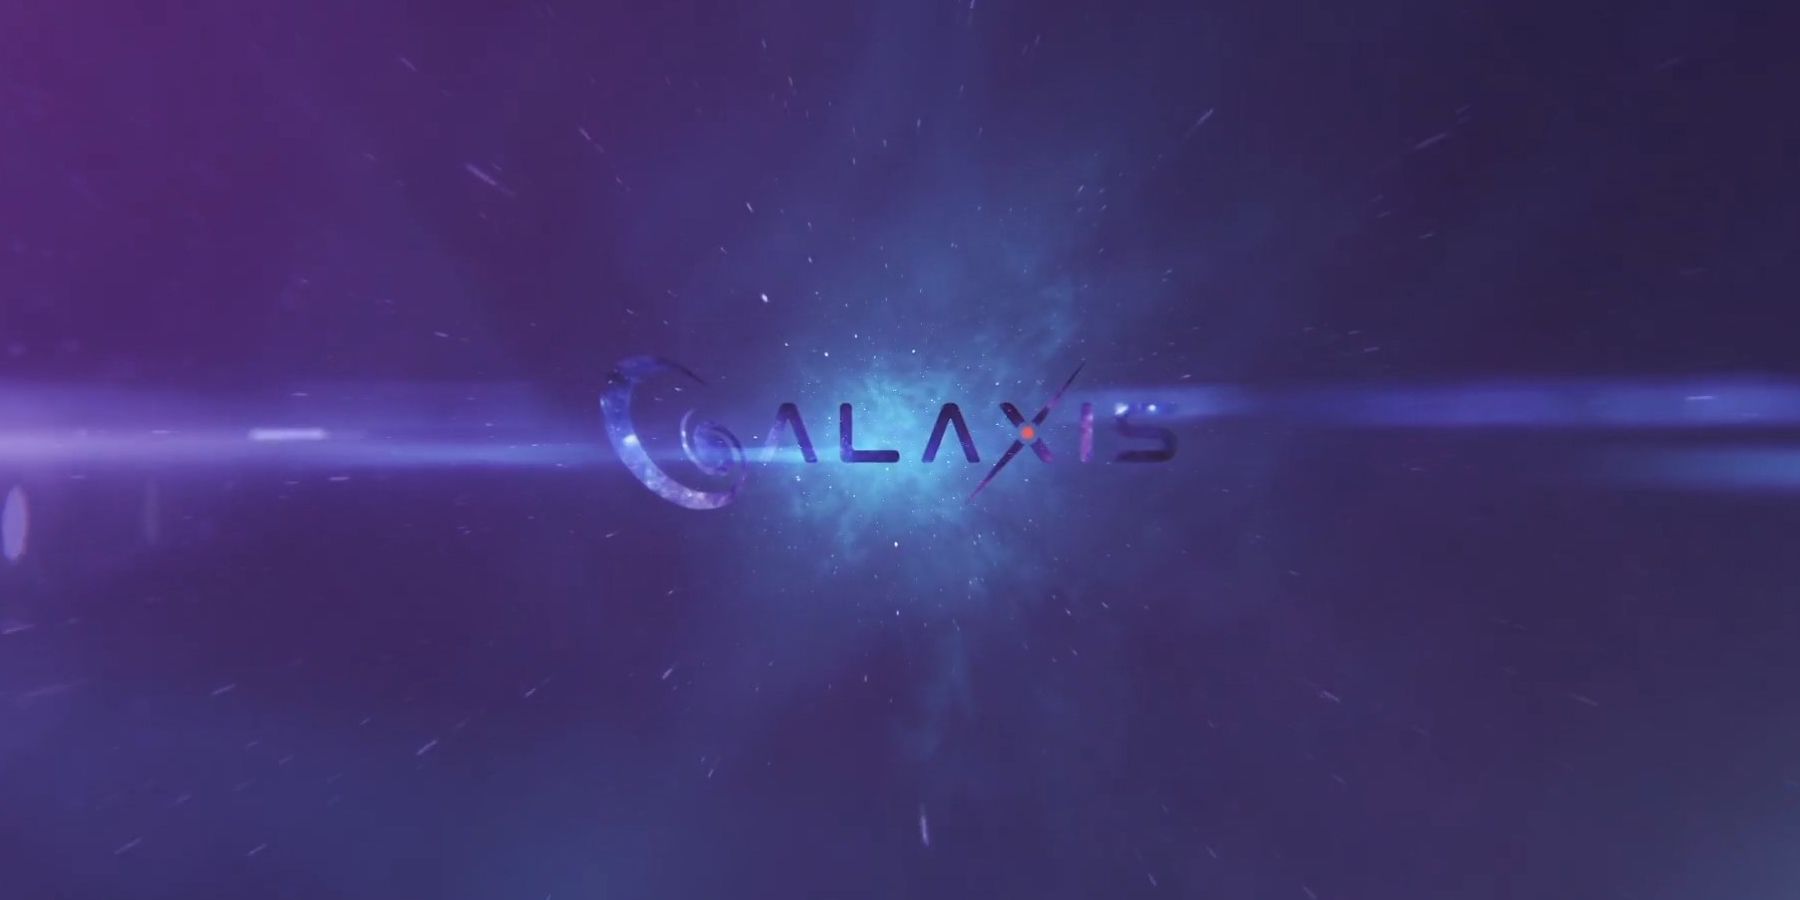 Galaxis -interview: CEO Max Gallardo Detaljer streaming platforms point -systemer, samfundsmoderation og mere